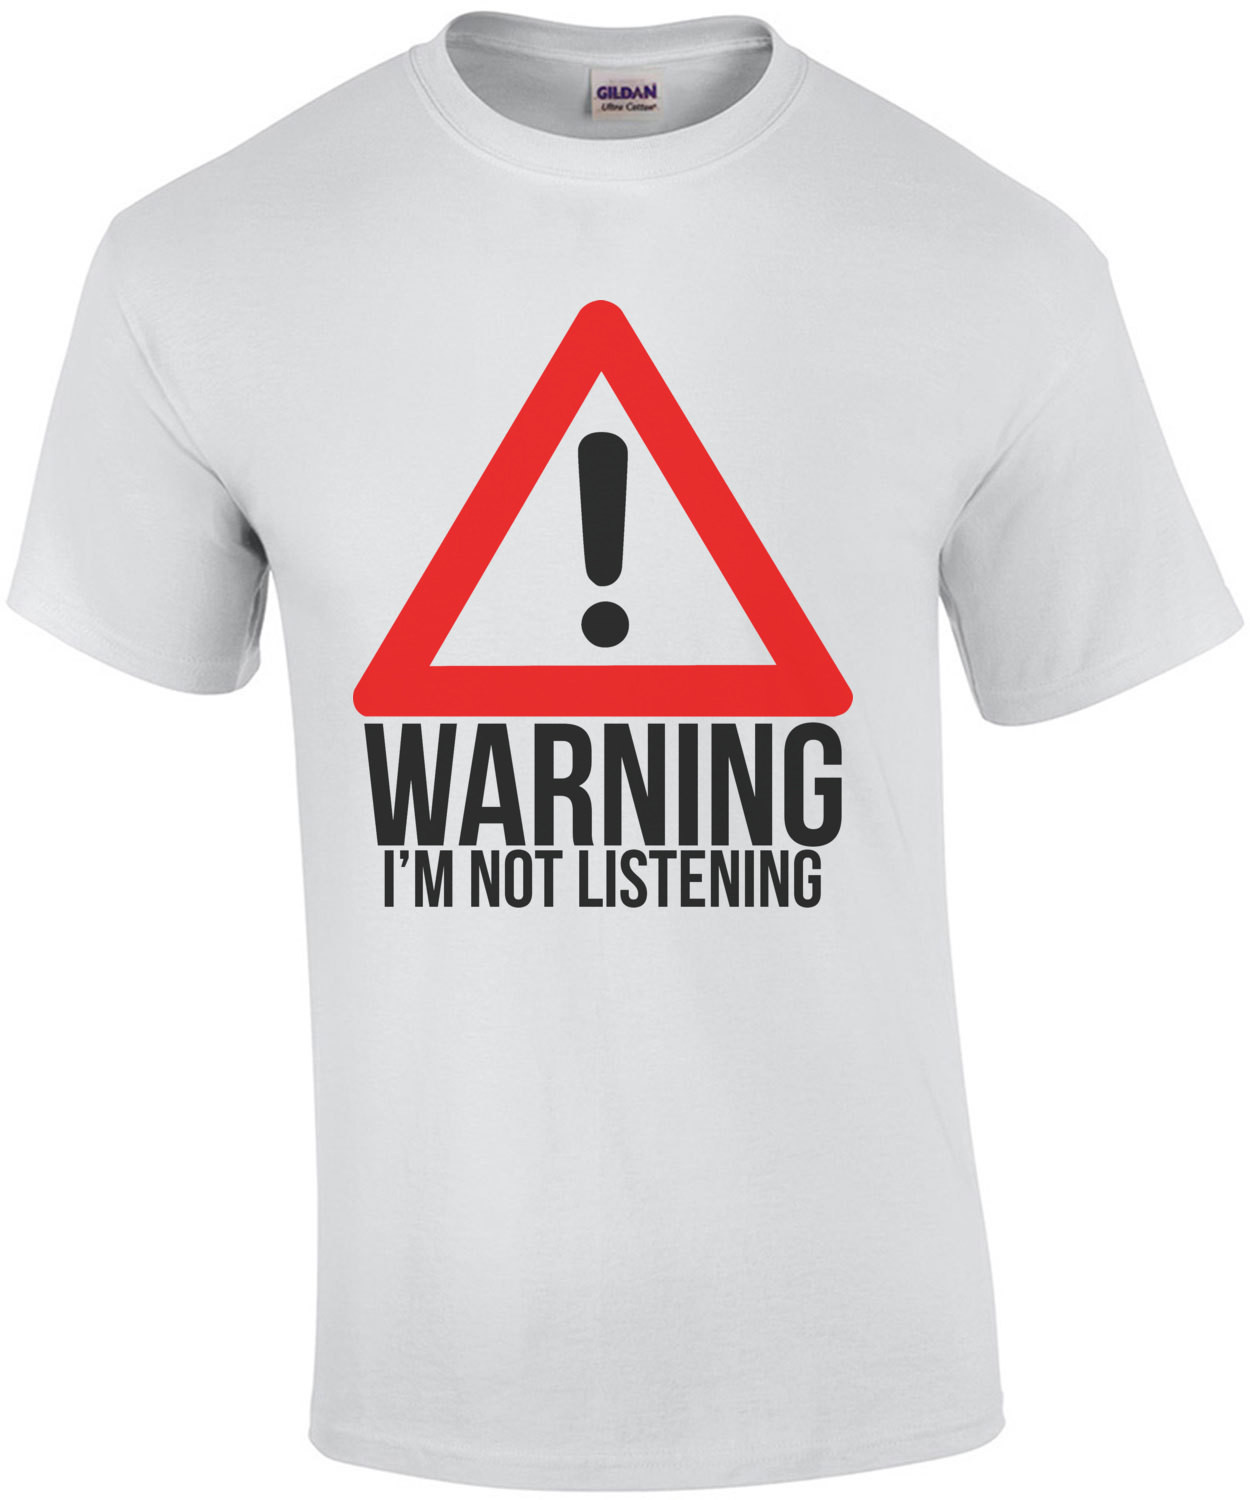 Warning: I'm Not Listening Shirt